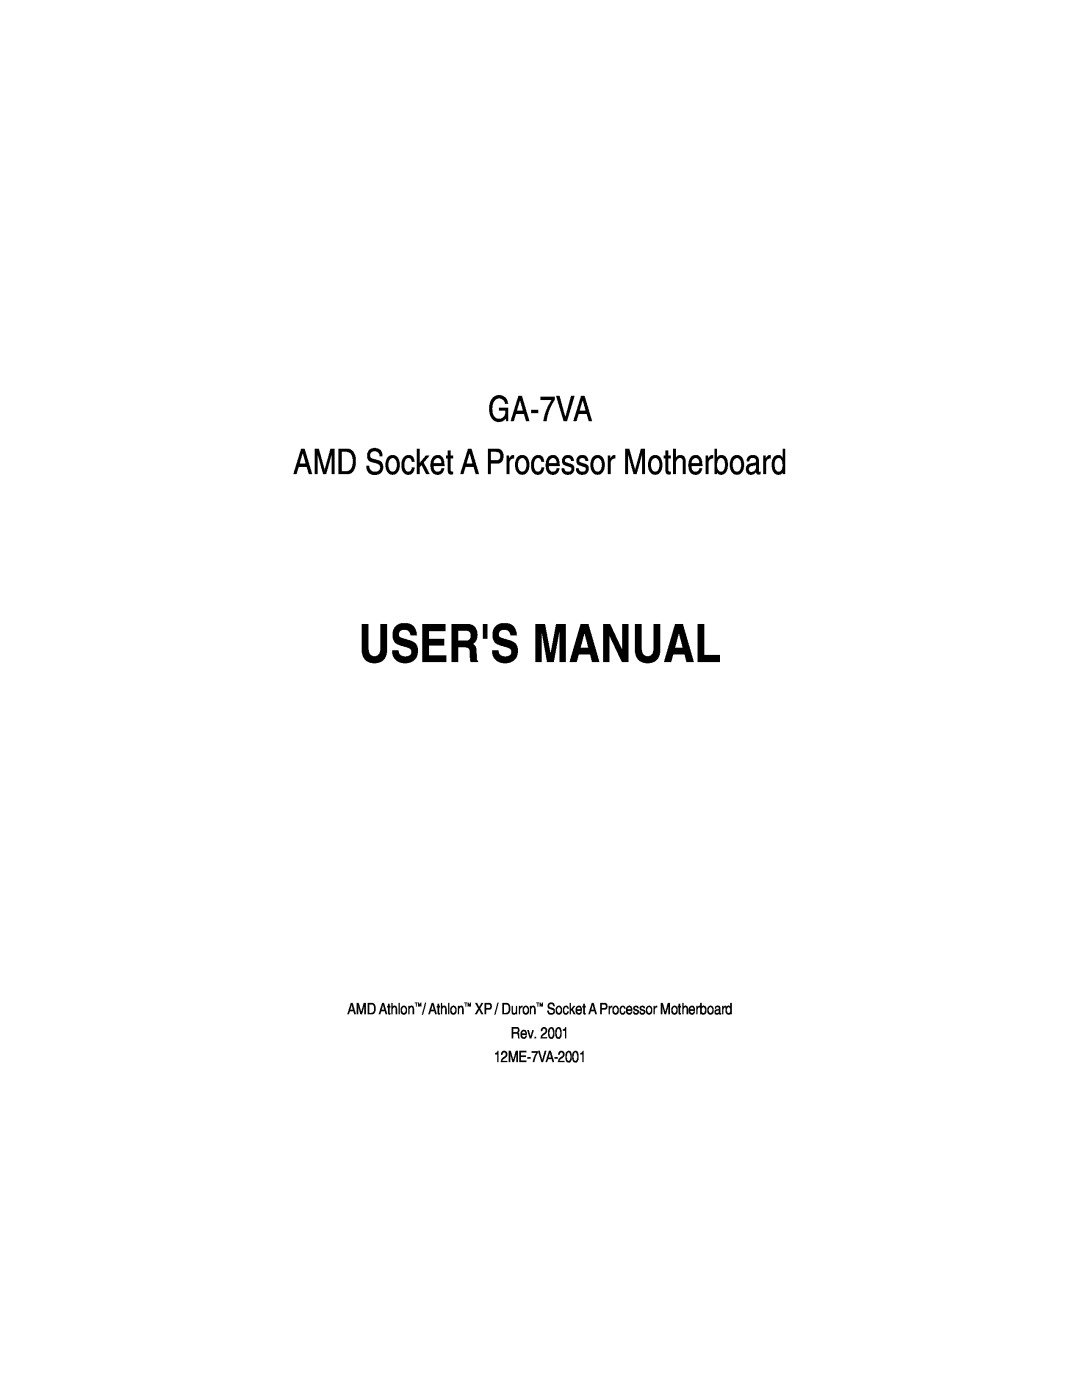 Gigabyte manual Users Manual, GA-7VA AMD Socket A Processor Motherboard 